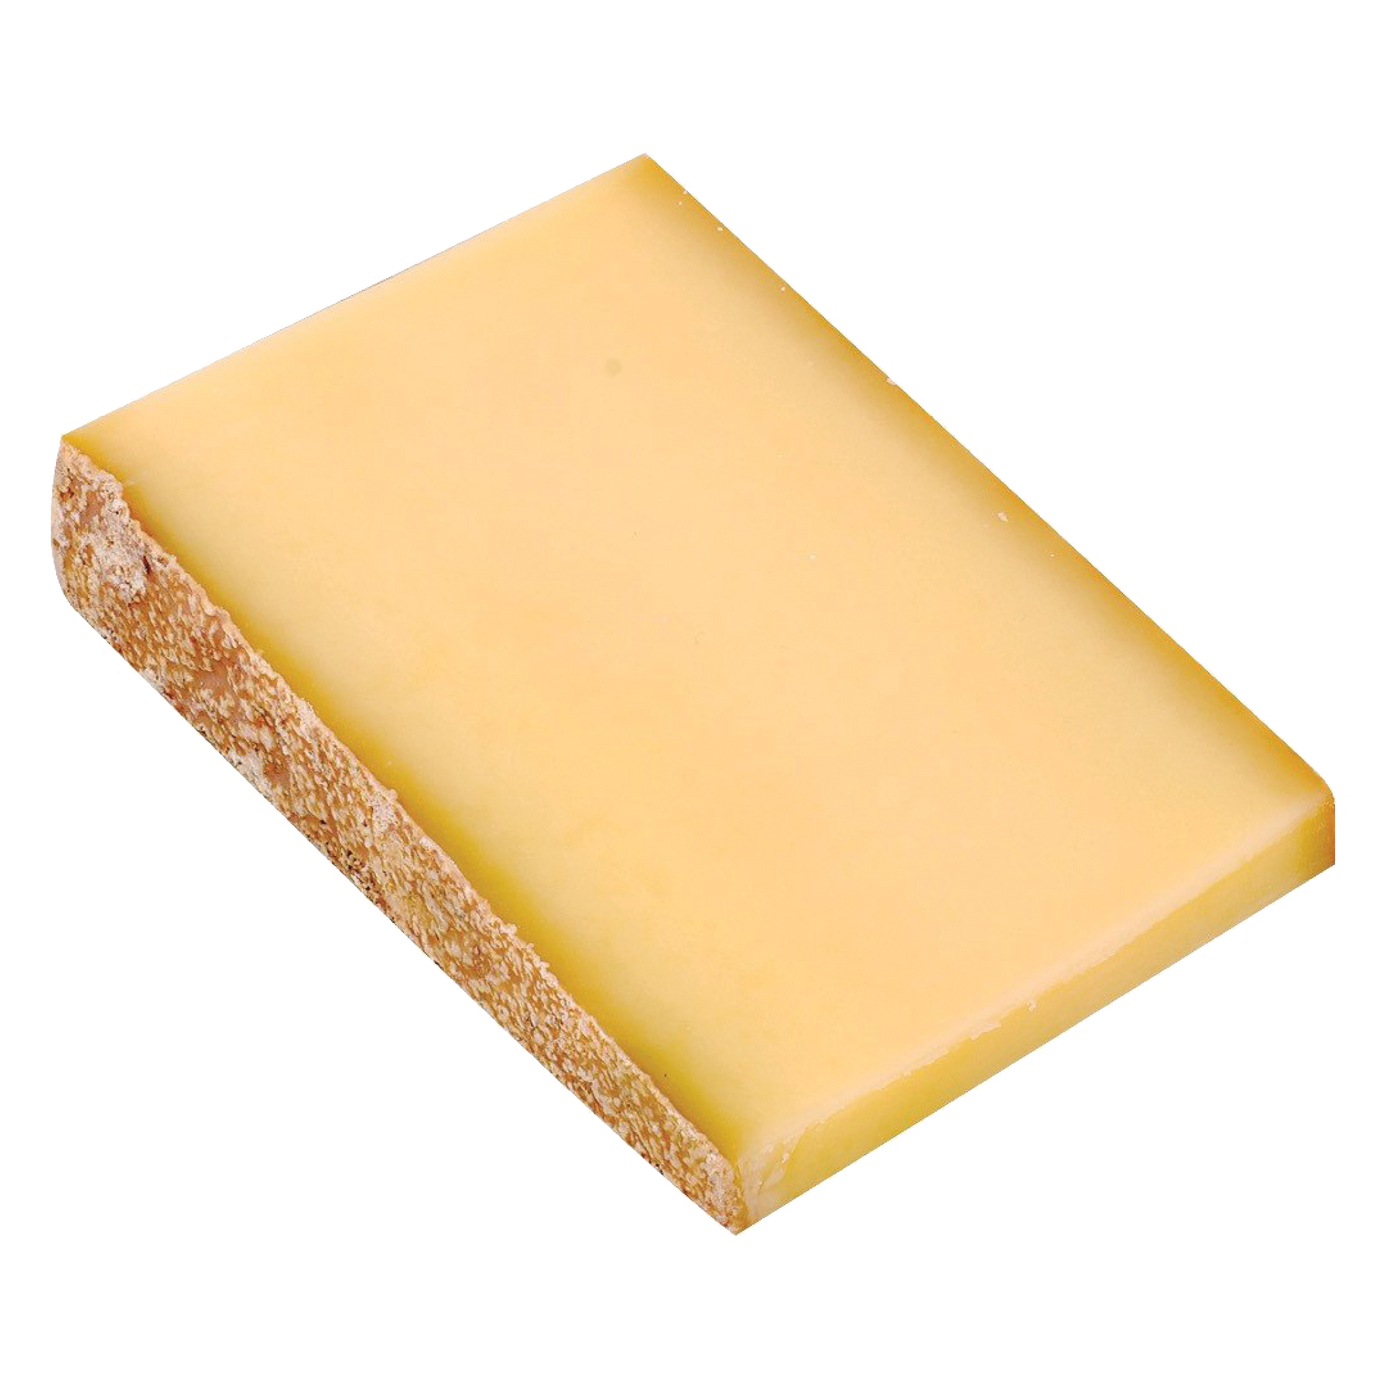 12 Month Aged Comté Cheese